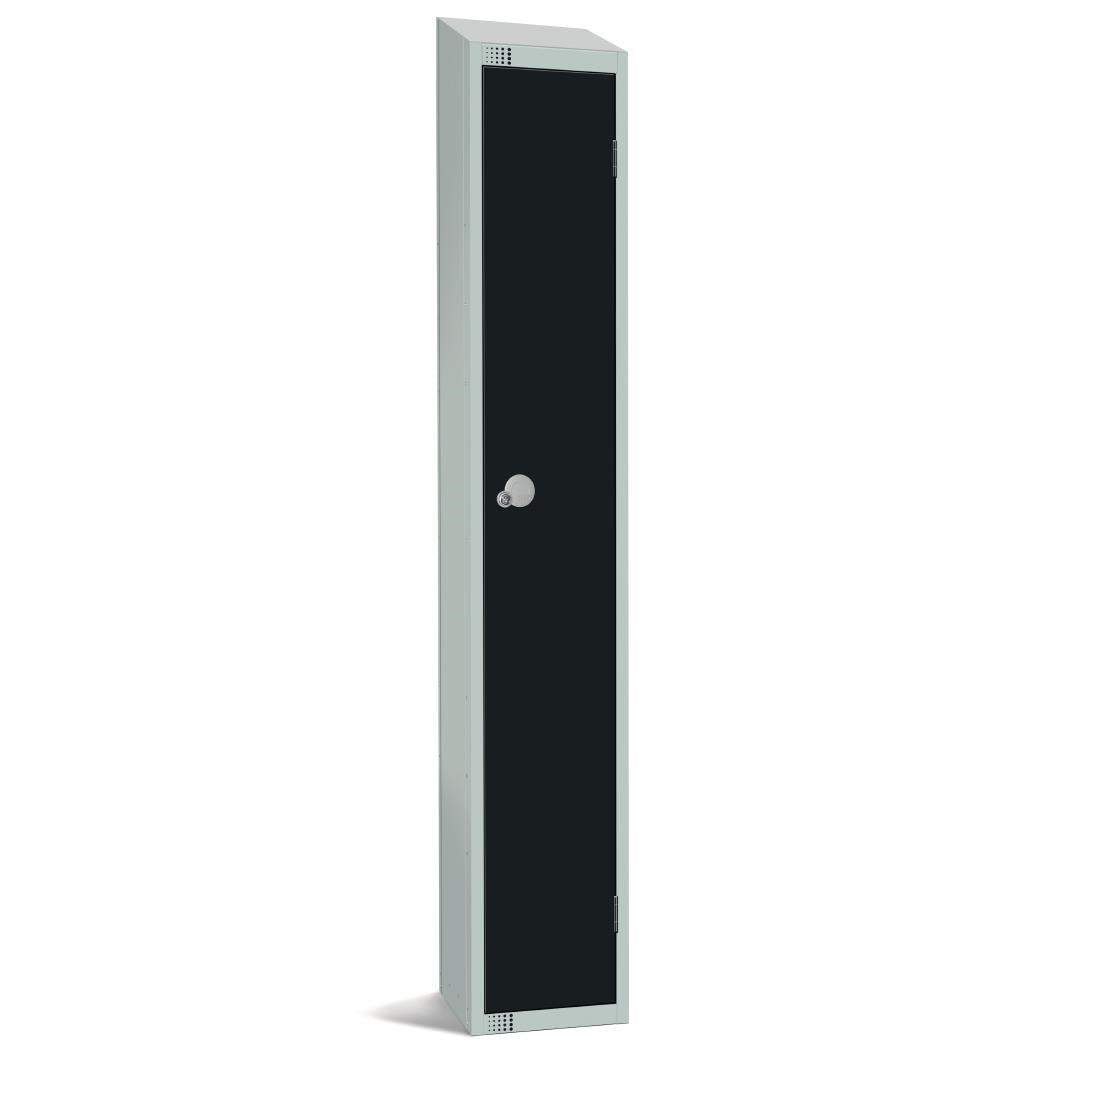 GR670-ELS Elite Single Door Electronic Combination Locker with sloping top Black JD Catering Equipment Solutions Ltd